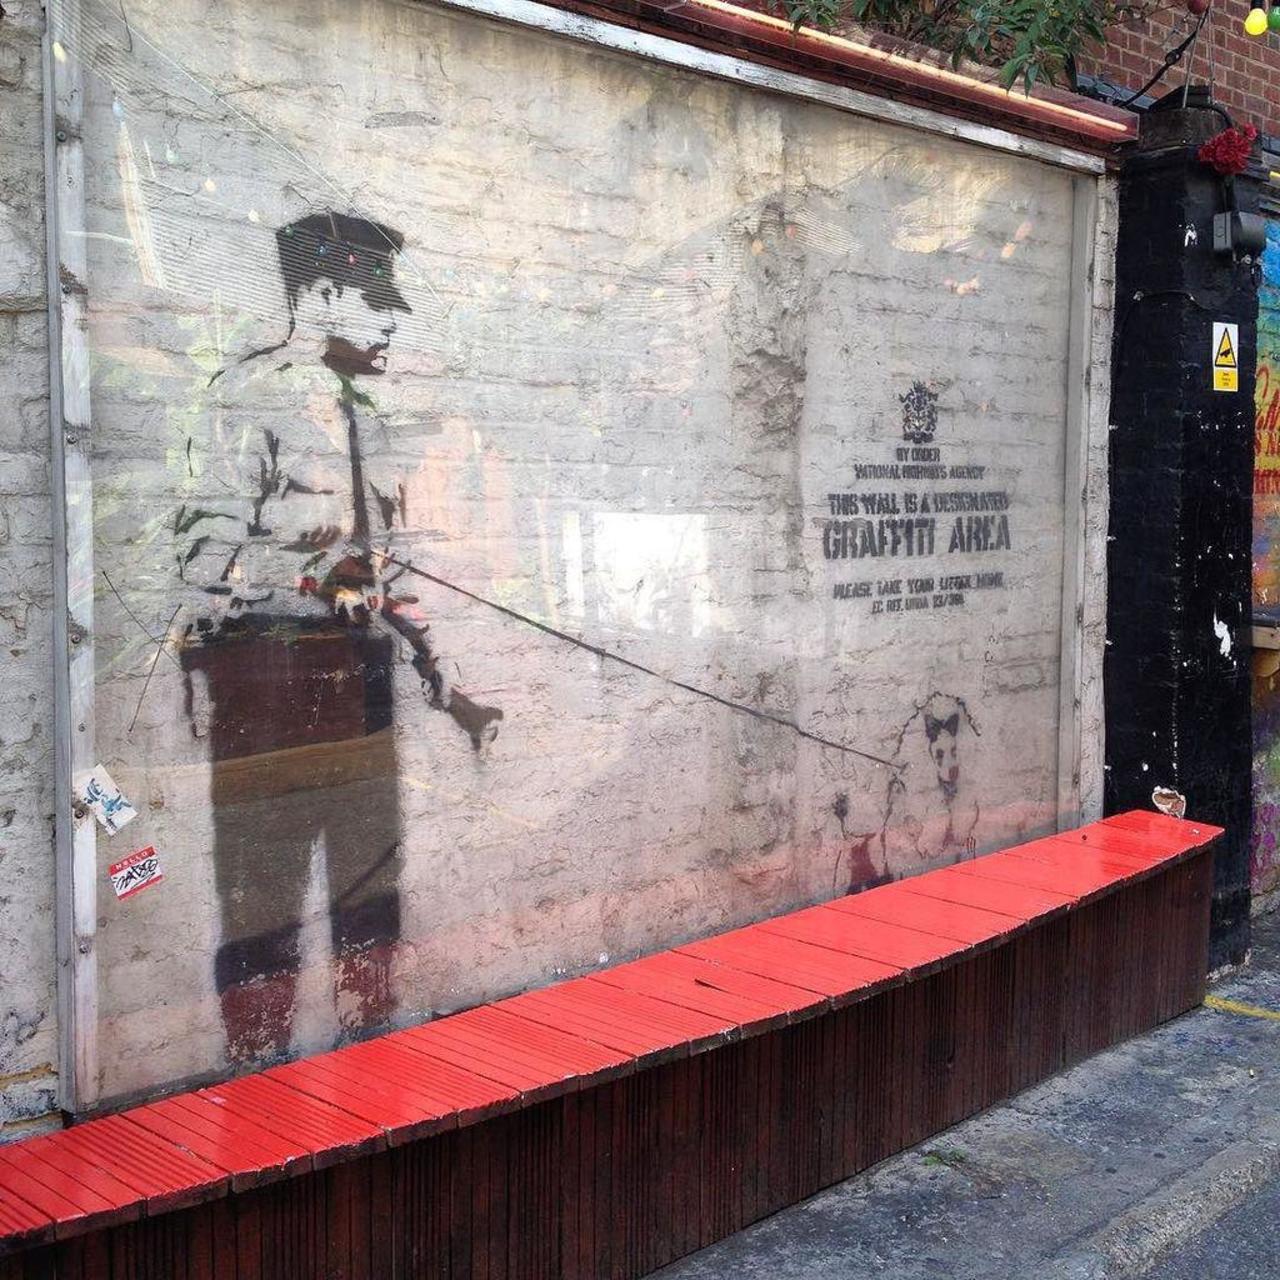 Banksy. #streetart #streetartlondon #graffiti #london #thisislondon by isadarko http://t.co/hhZz7XtFpG